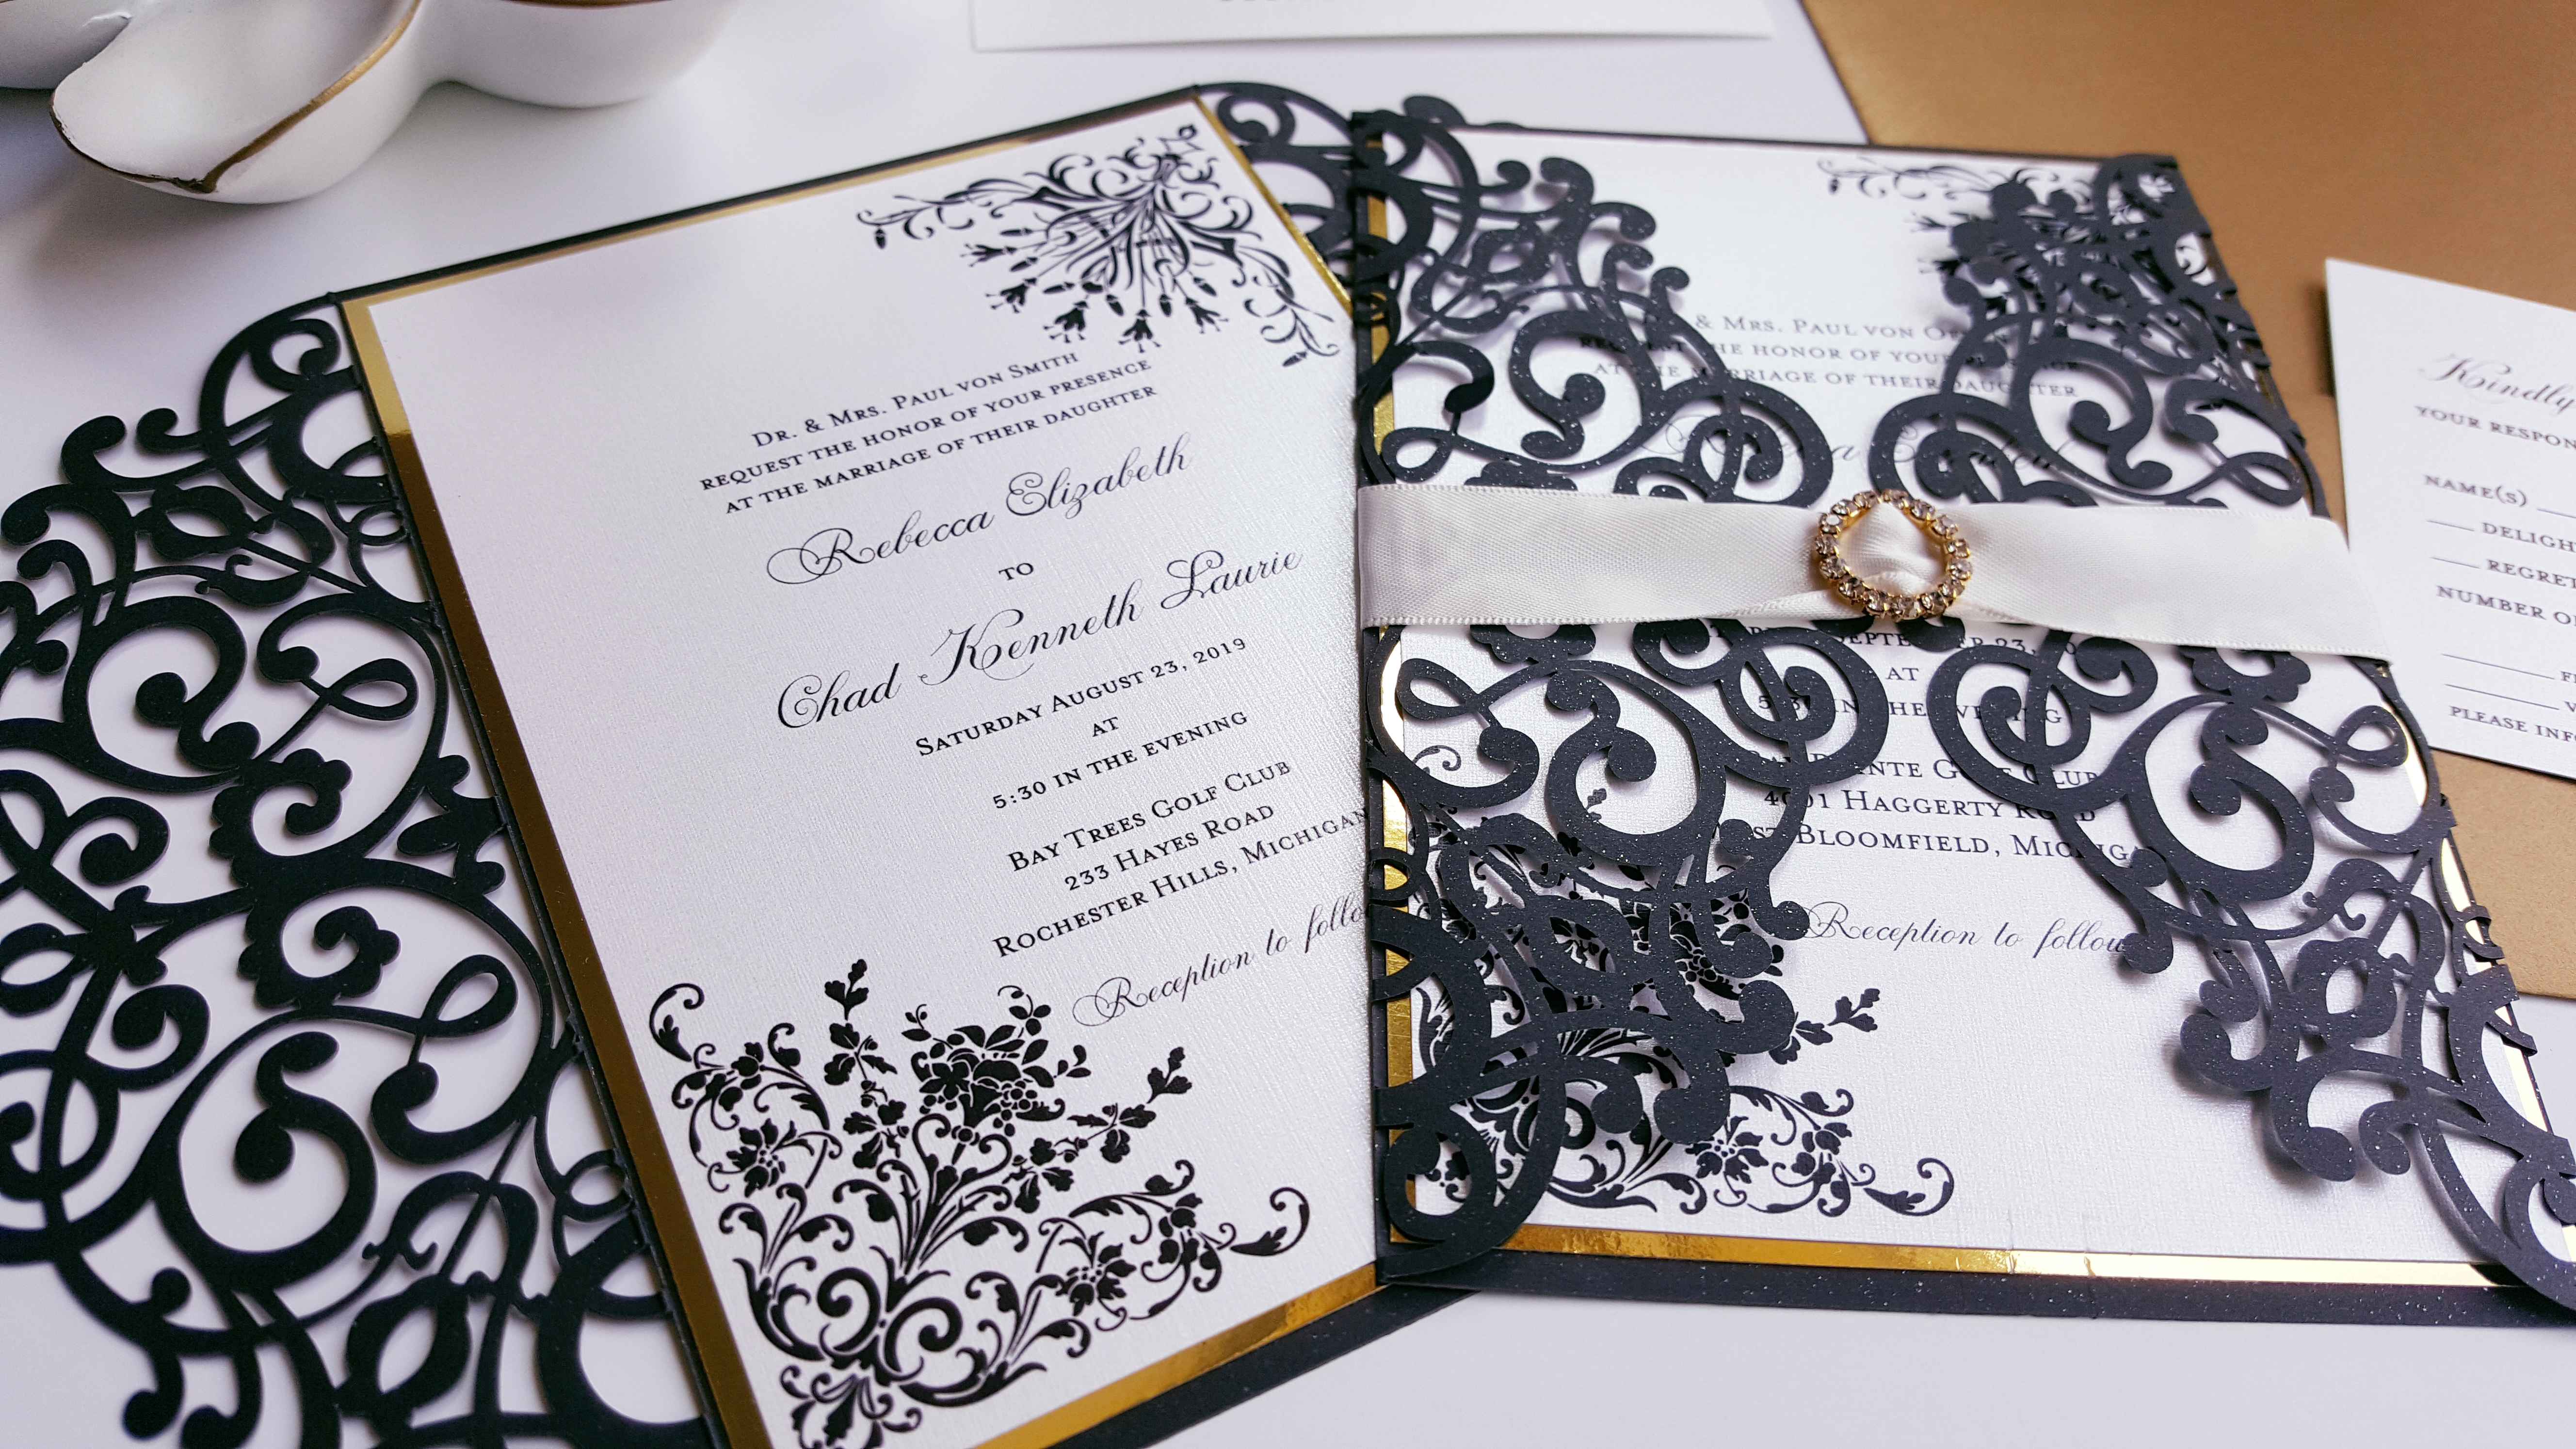 Elegant simple wedding invitations - Black and white